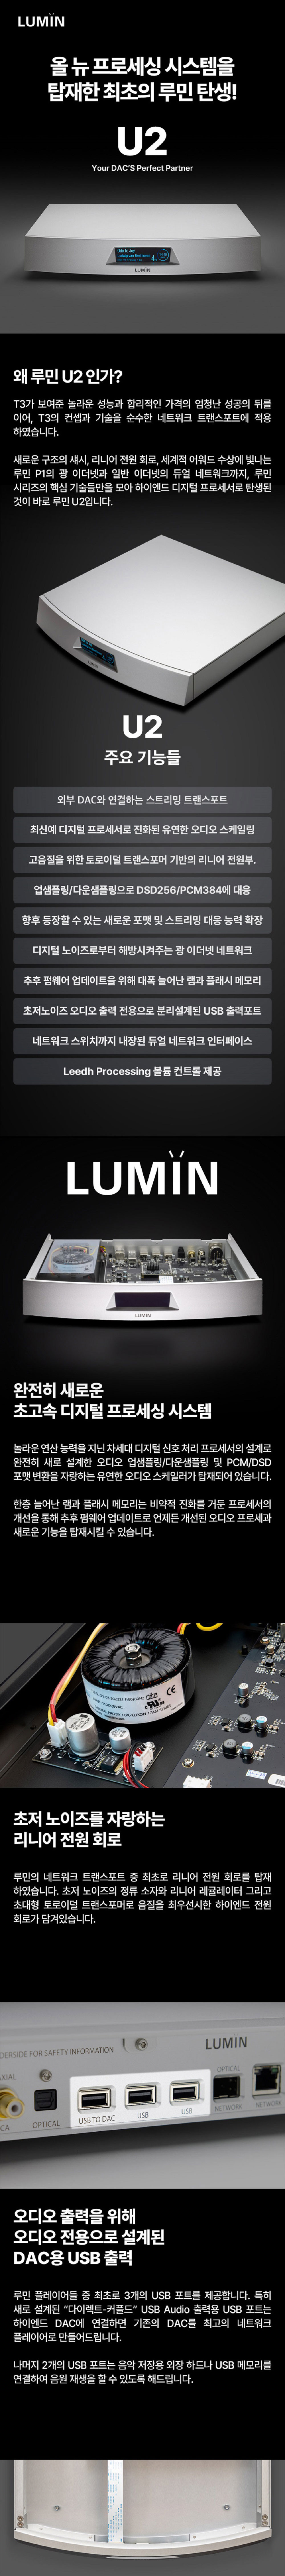 Lumin-U2-Detail4-1.jpg